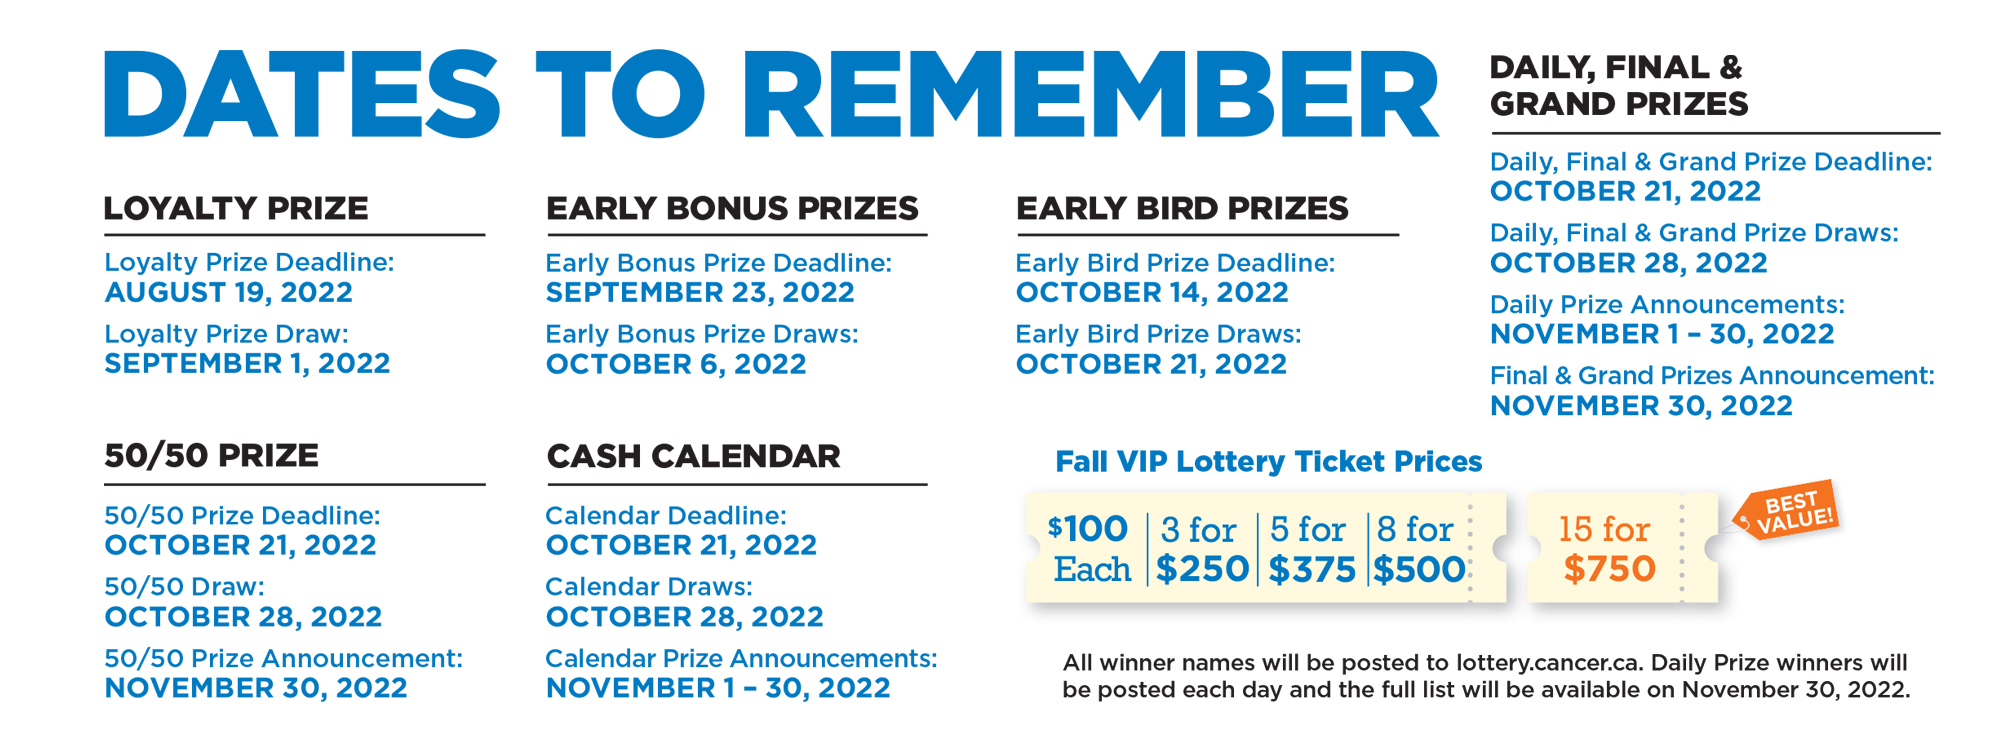 Canadian Cancer Society Lottery - Key Dates